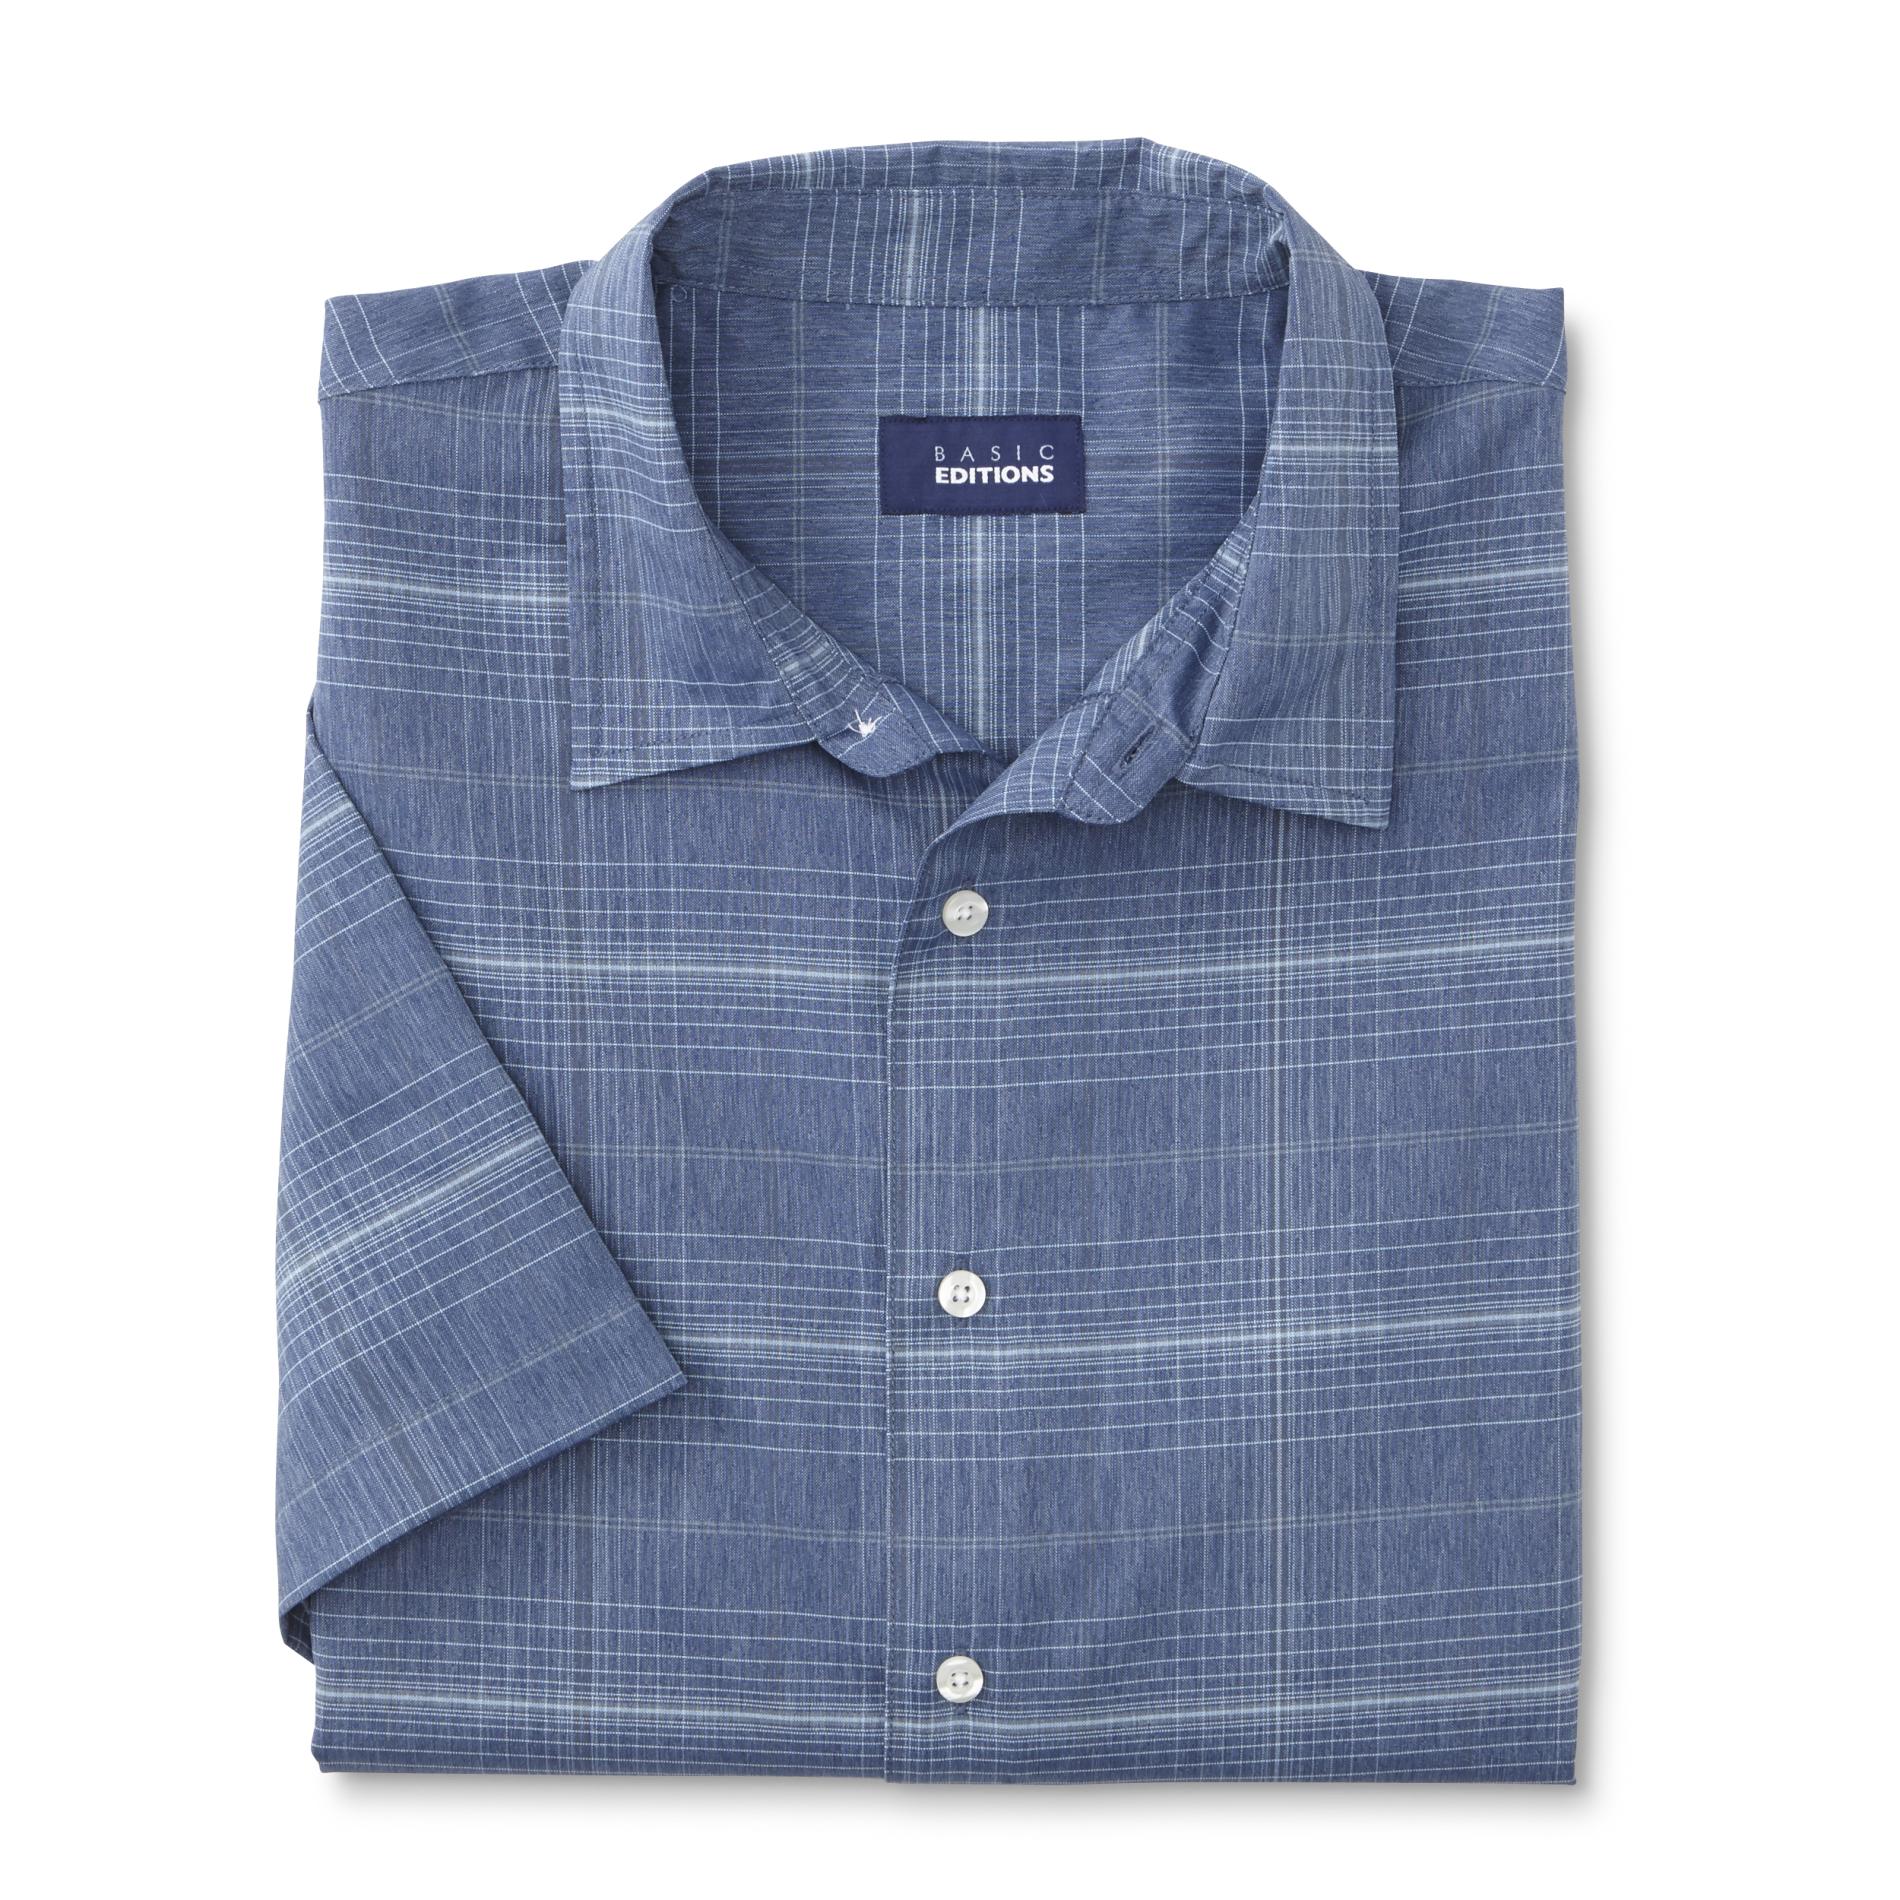 Basic Editions Men's Short-Sleeve Microfiber Shirt - Grid